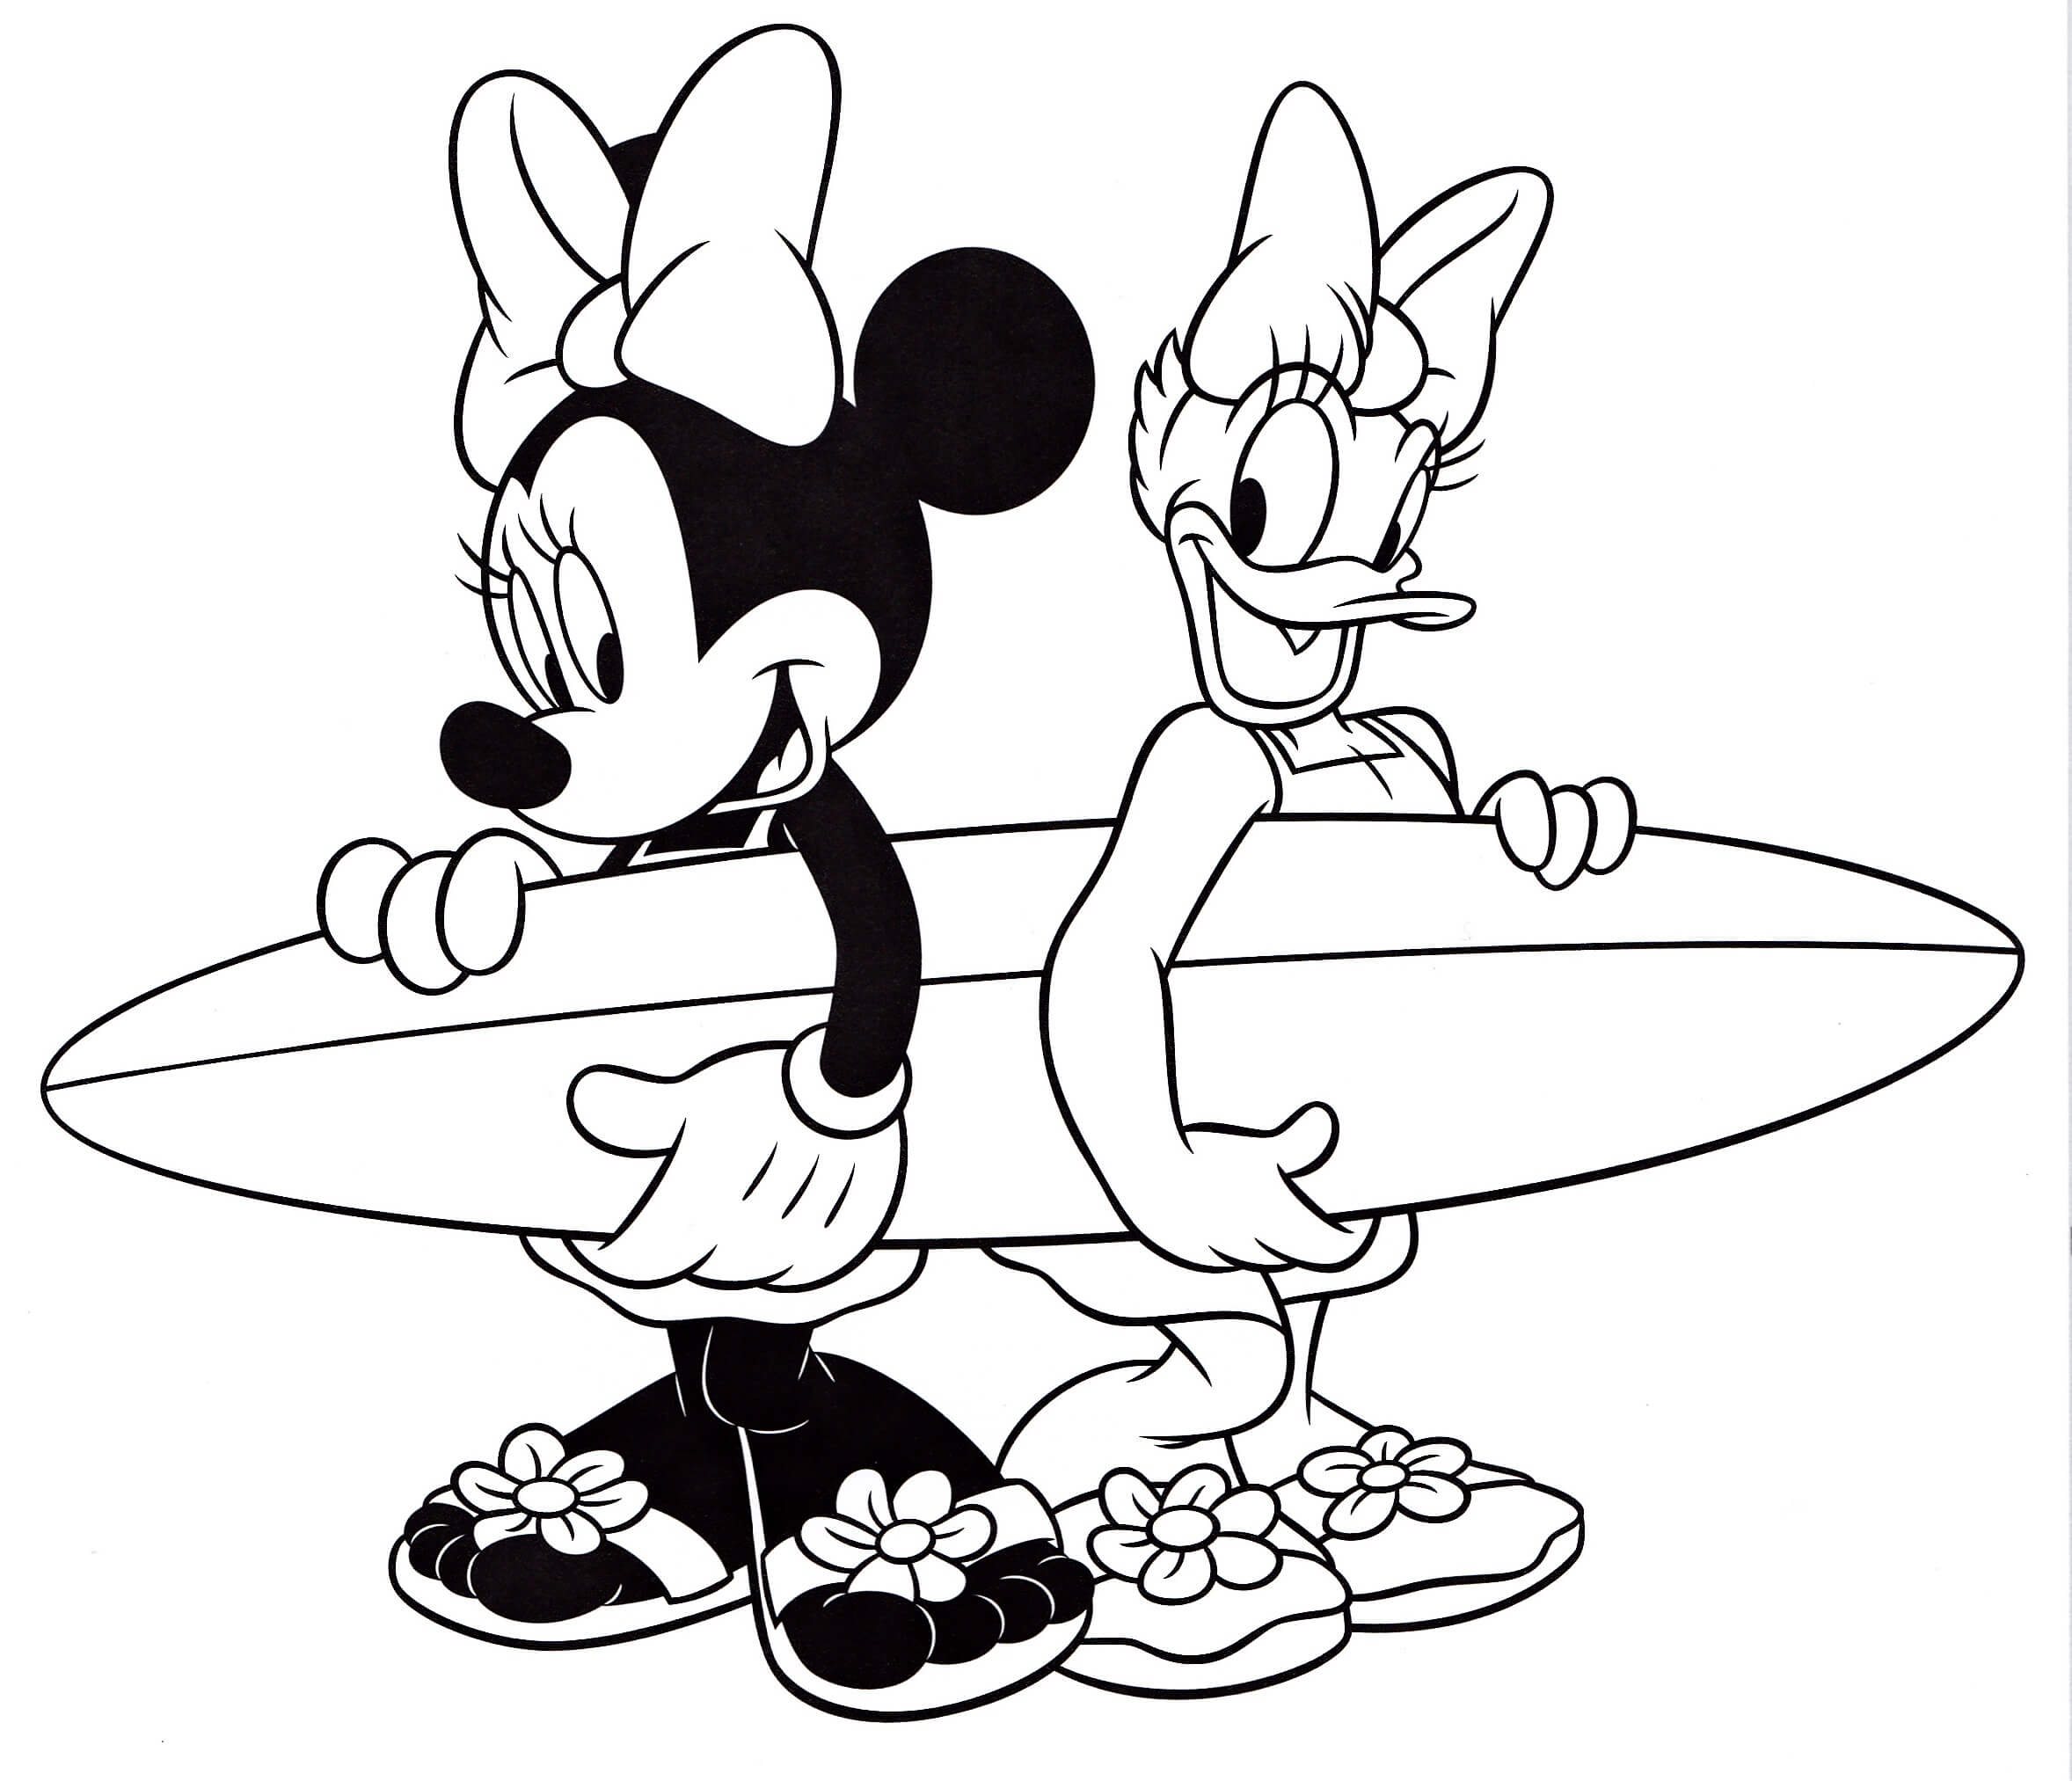 Daisy Duck y Minnie Mouse Surfean